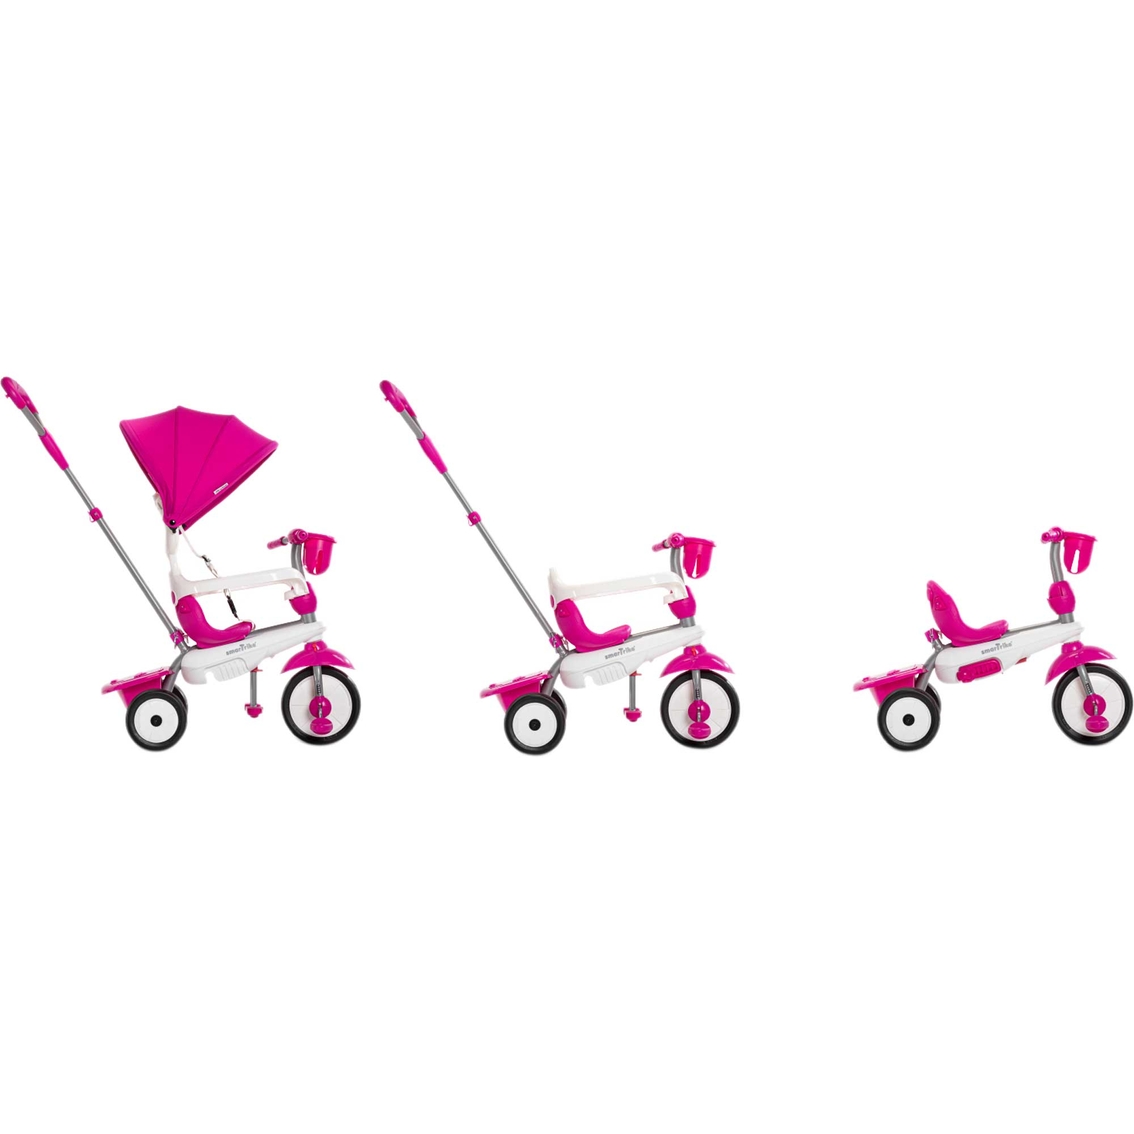 smarTrike Breeze Plus Kids Pink 4 in 1 Tricycle Push Bike - Image 2 of 6